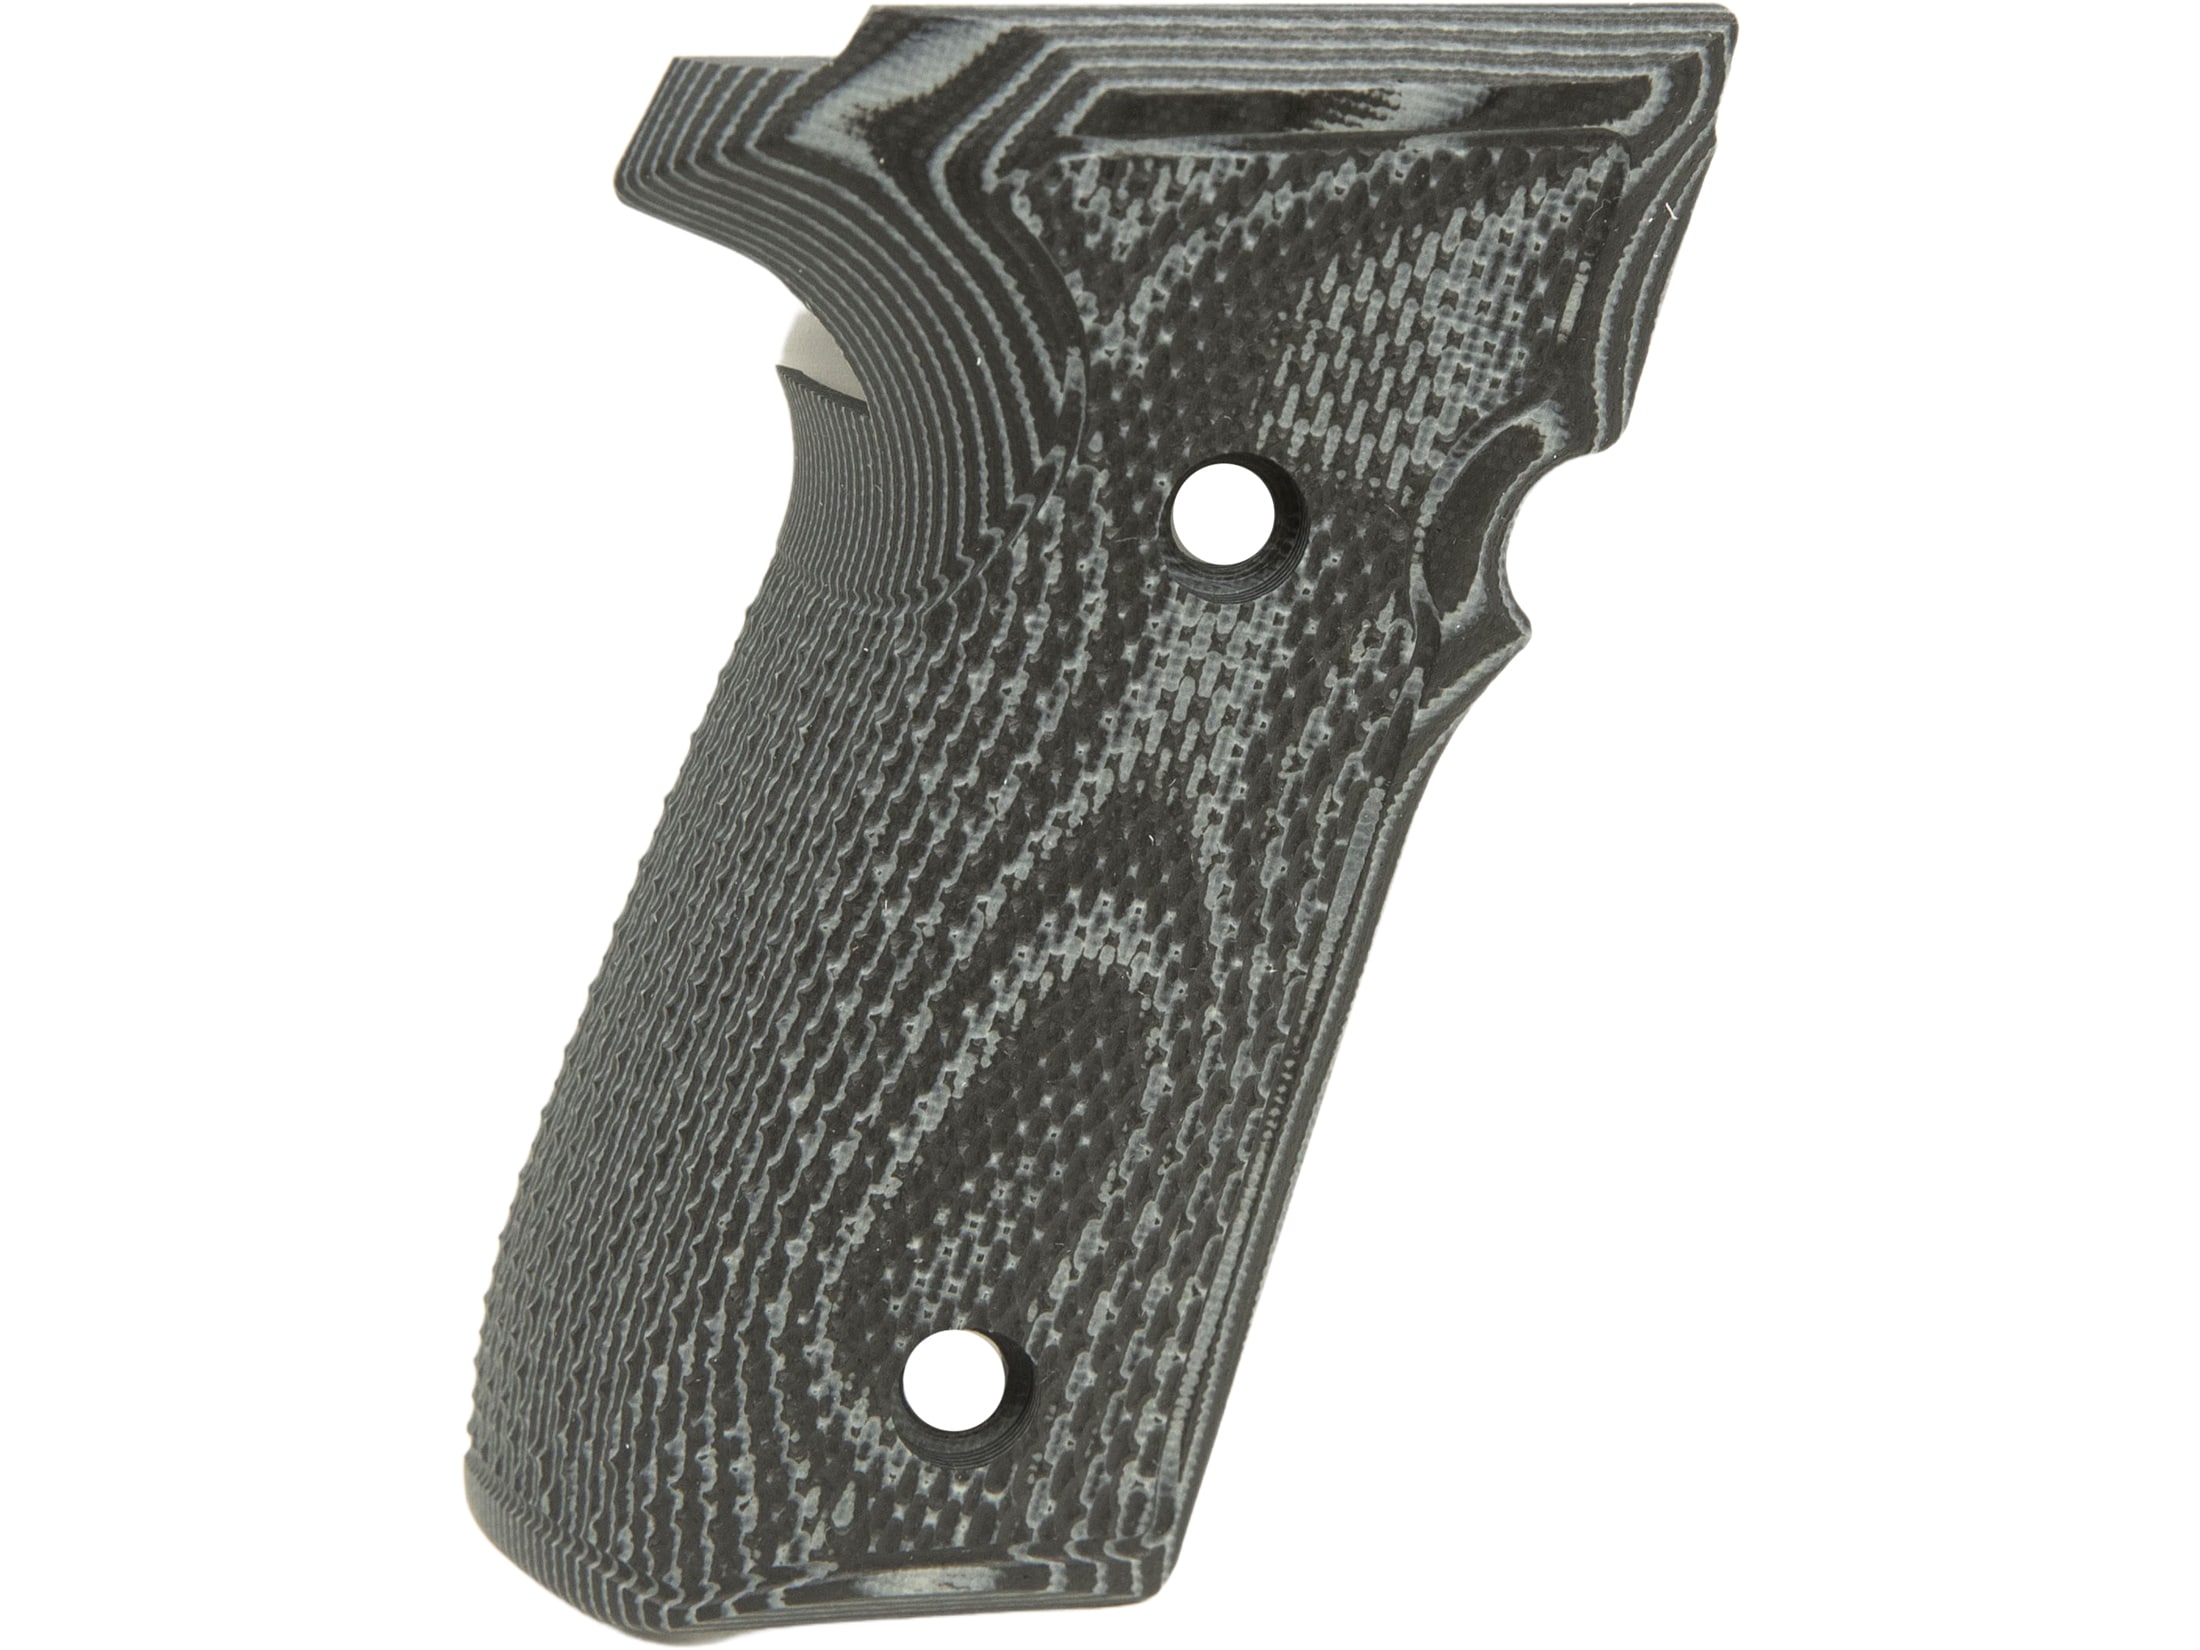 SIG SAUER P226 Contour Classic Grip: Inverse Checkered G10 - Solid Black